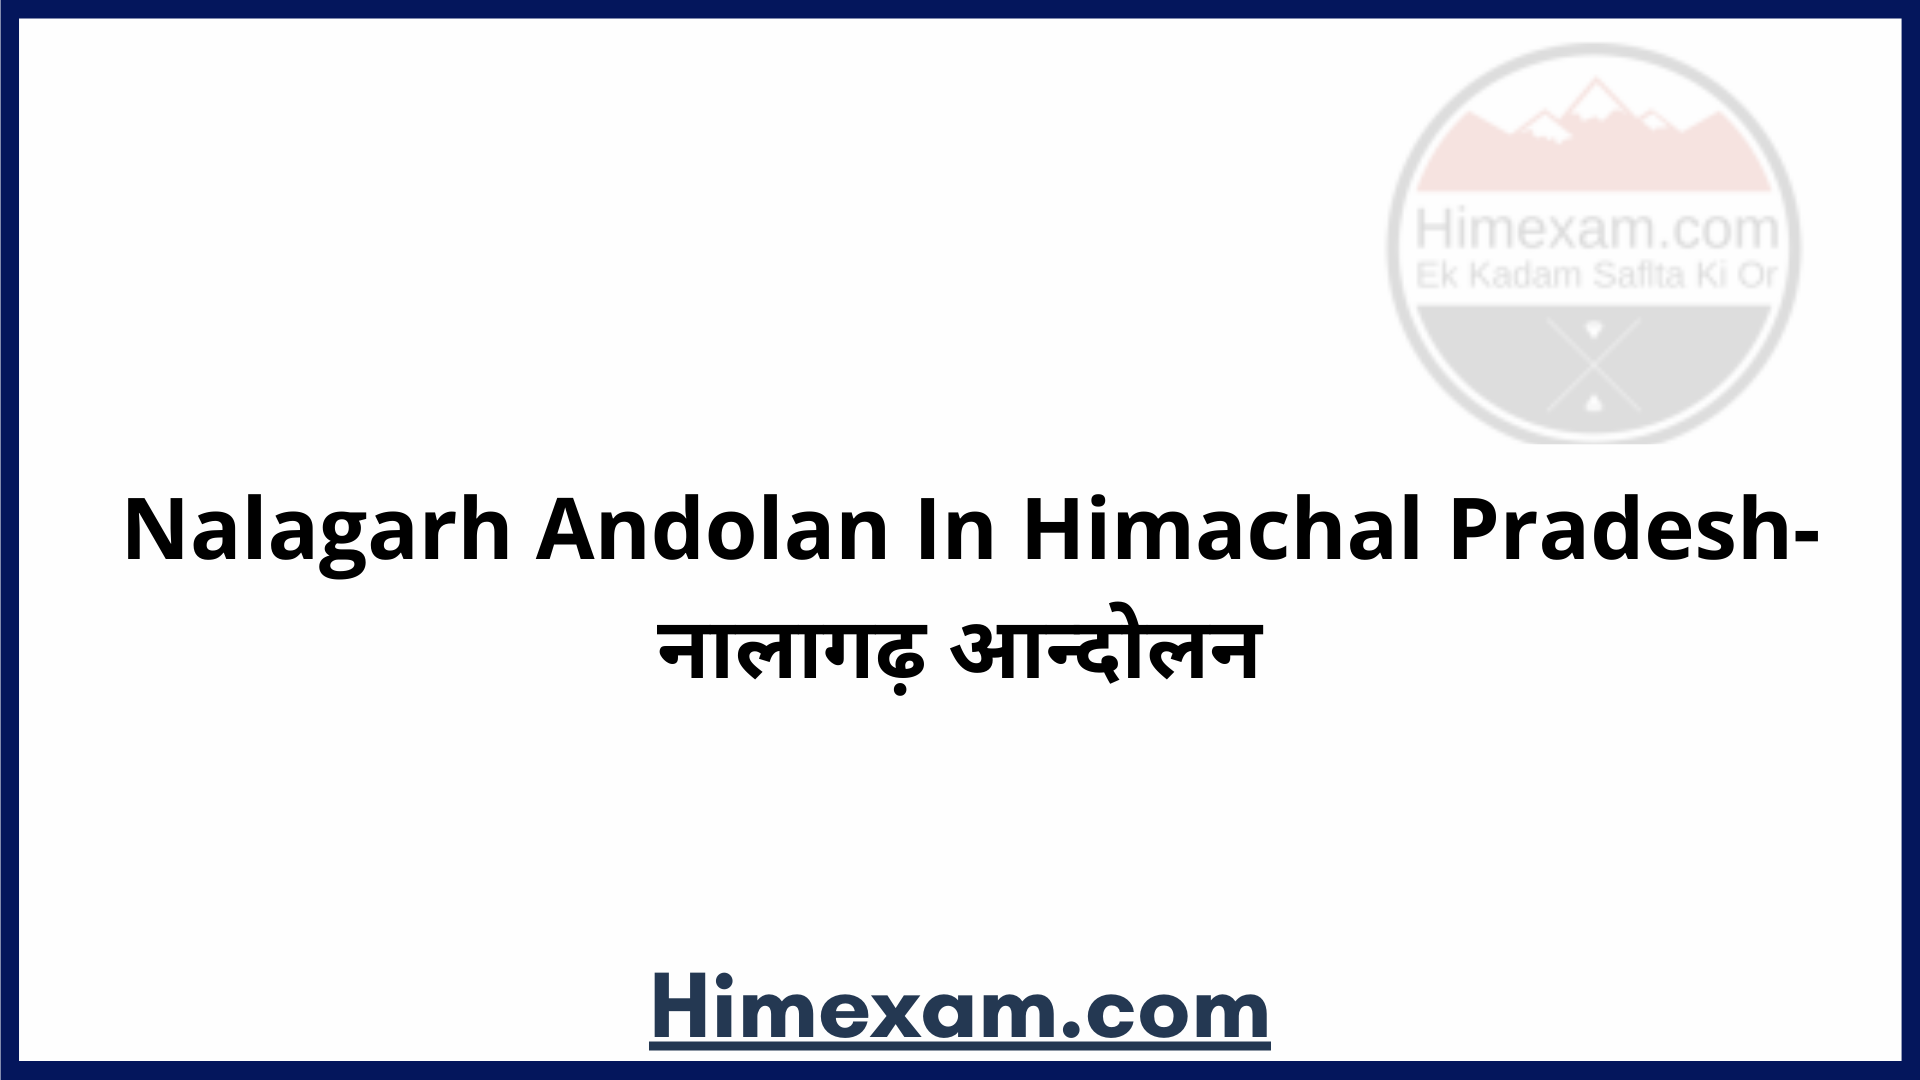 Nalagarh Andolan In Himachal Pradesh-नालागढ़ आन्दोलन